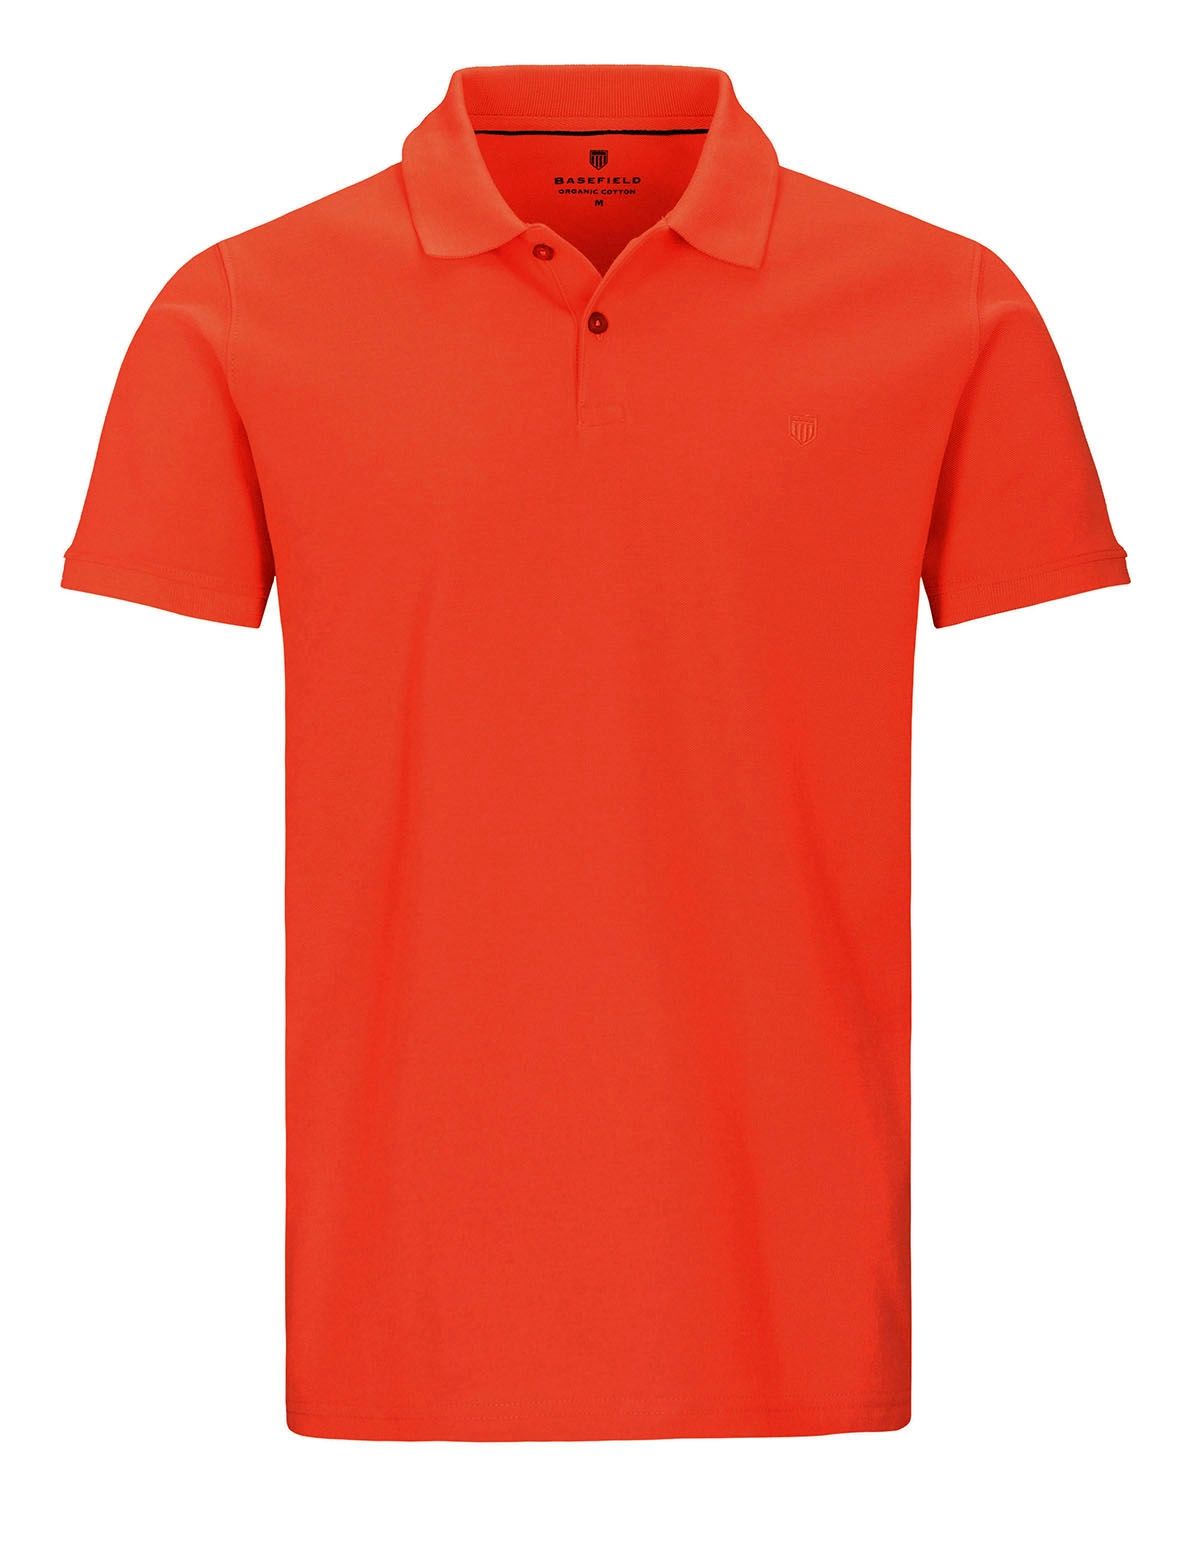  Poloshirt ORGANIC COTTON - Orange